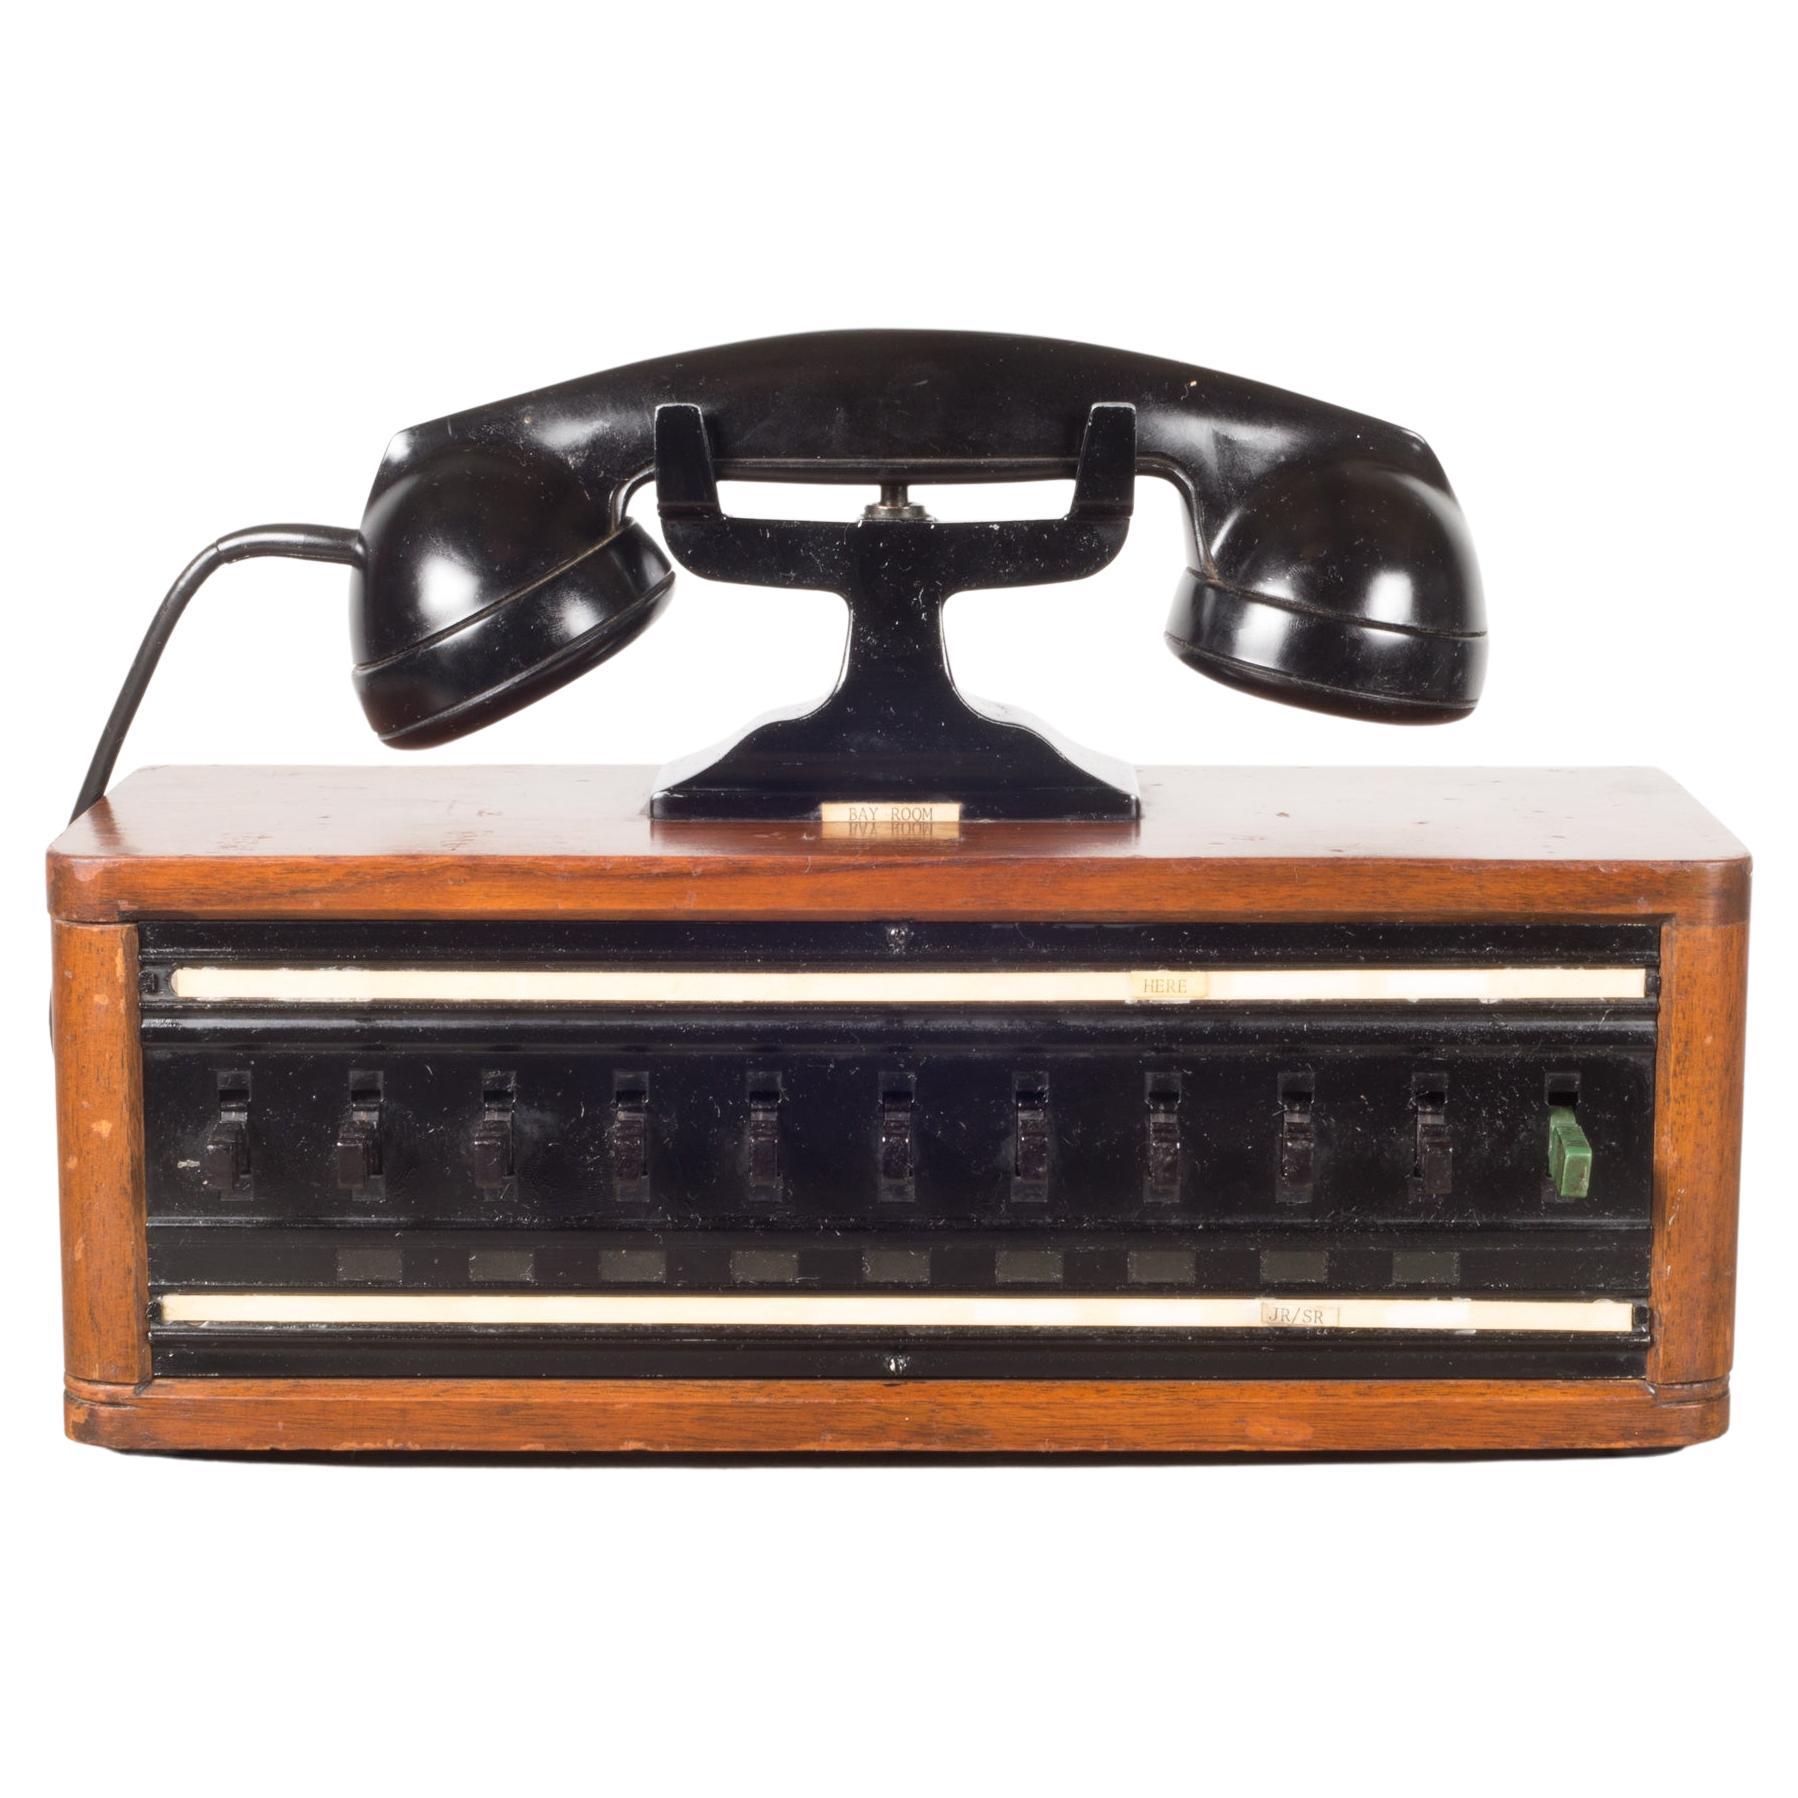 Antique World War ll Era US Navy Bakelite Switch Board Phone, c.1940 For Sale